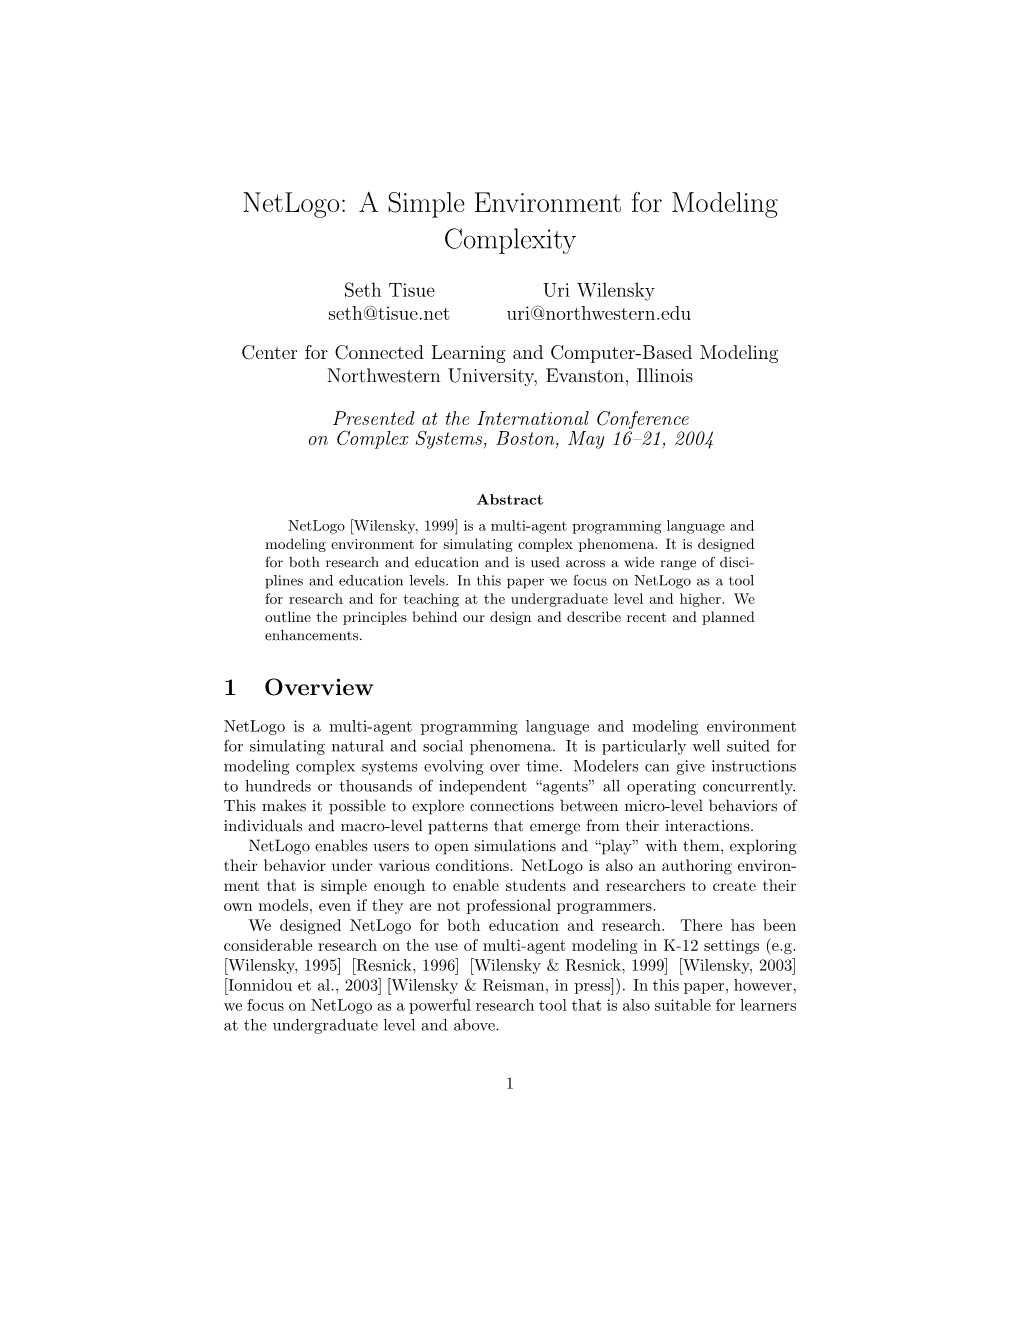 Netlogo: a Simple Environment for Modeling Complexity